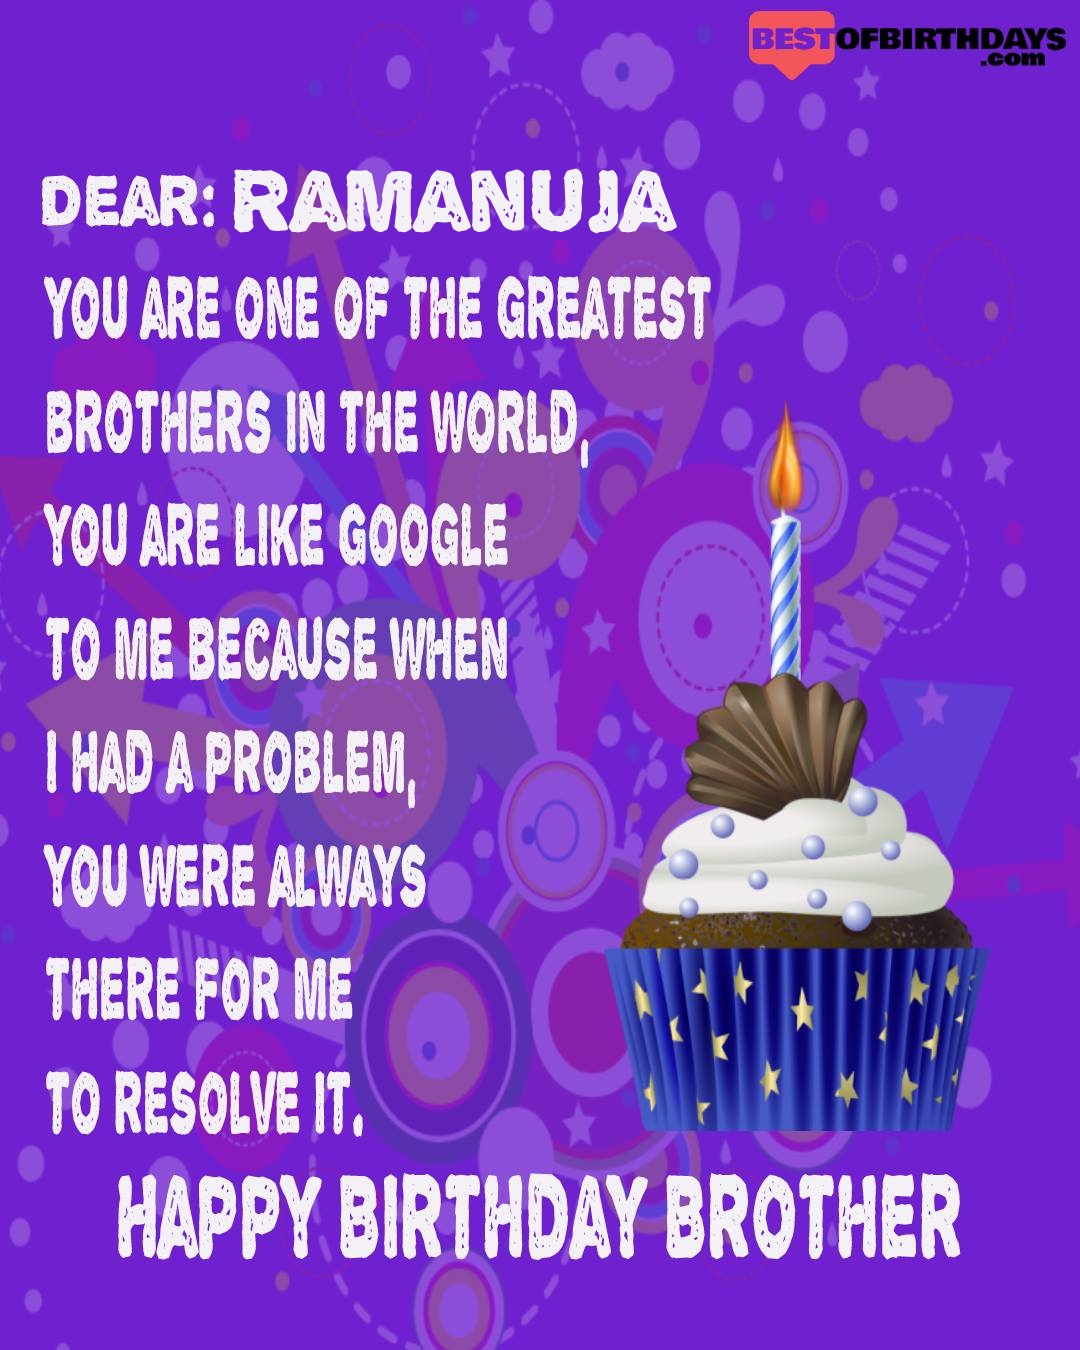 Happy birthday ramanuja bhai brother bro